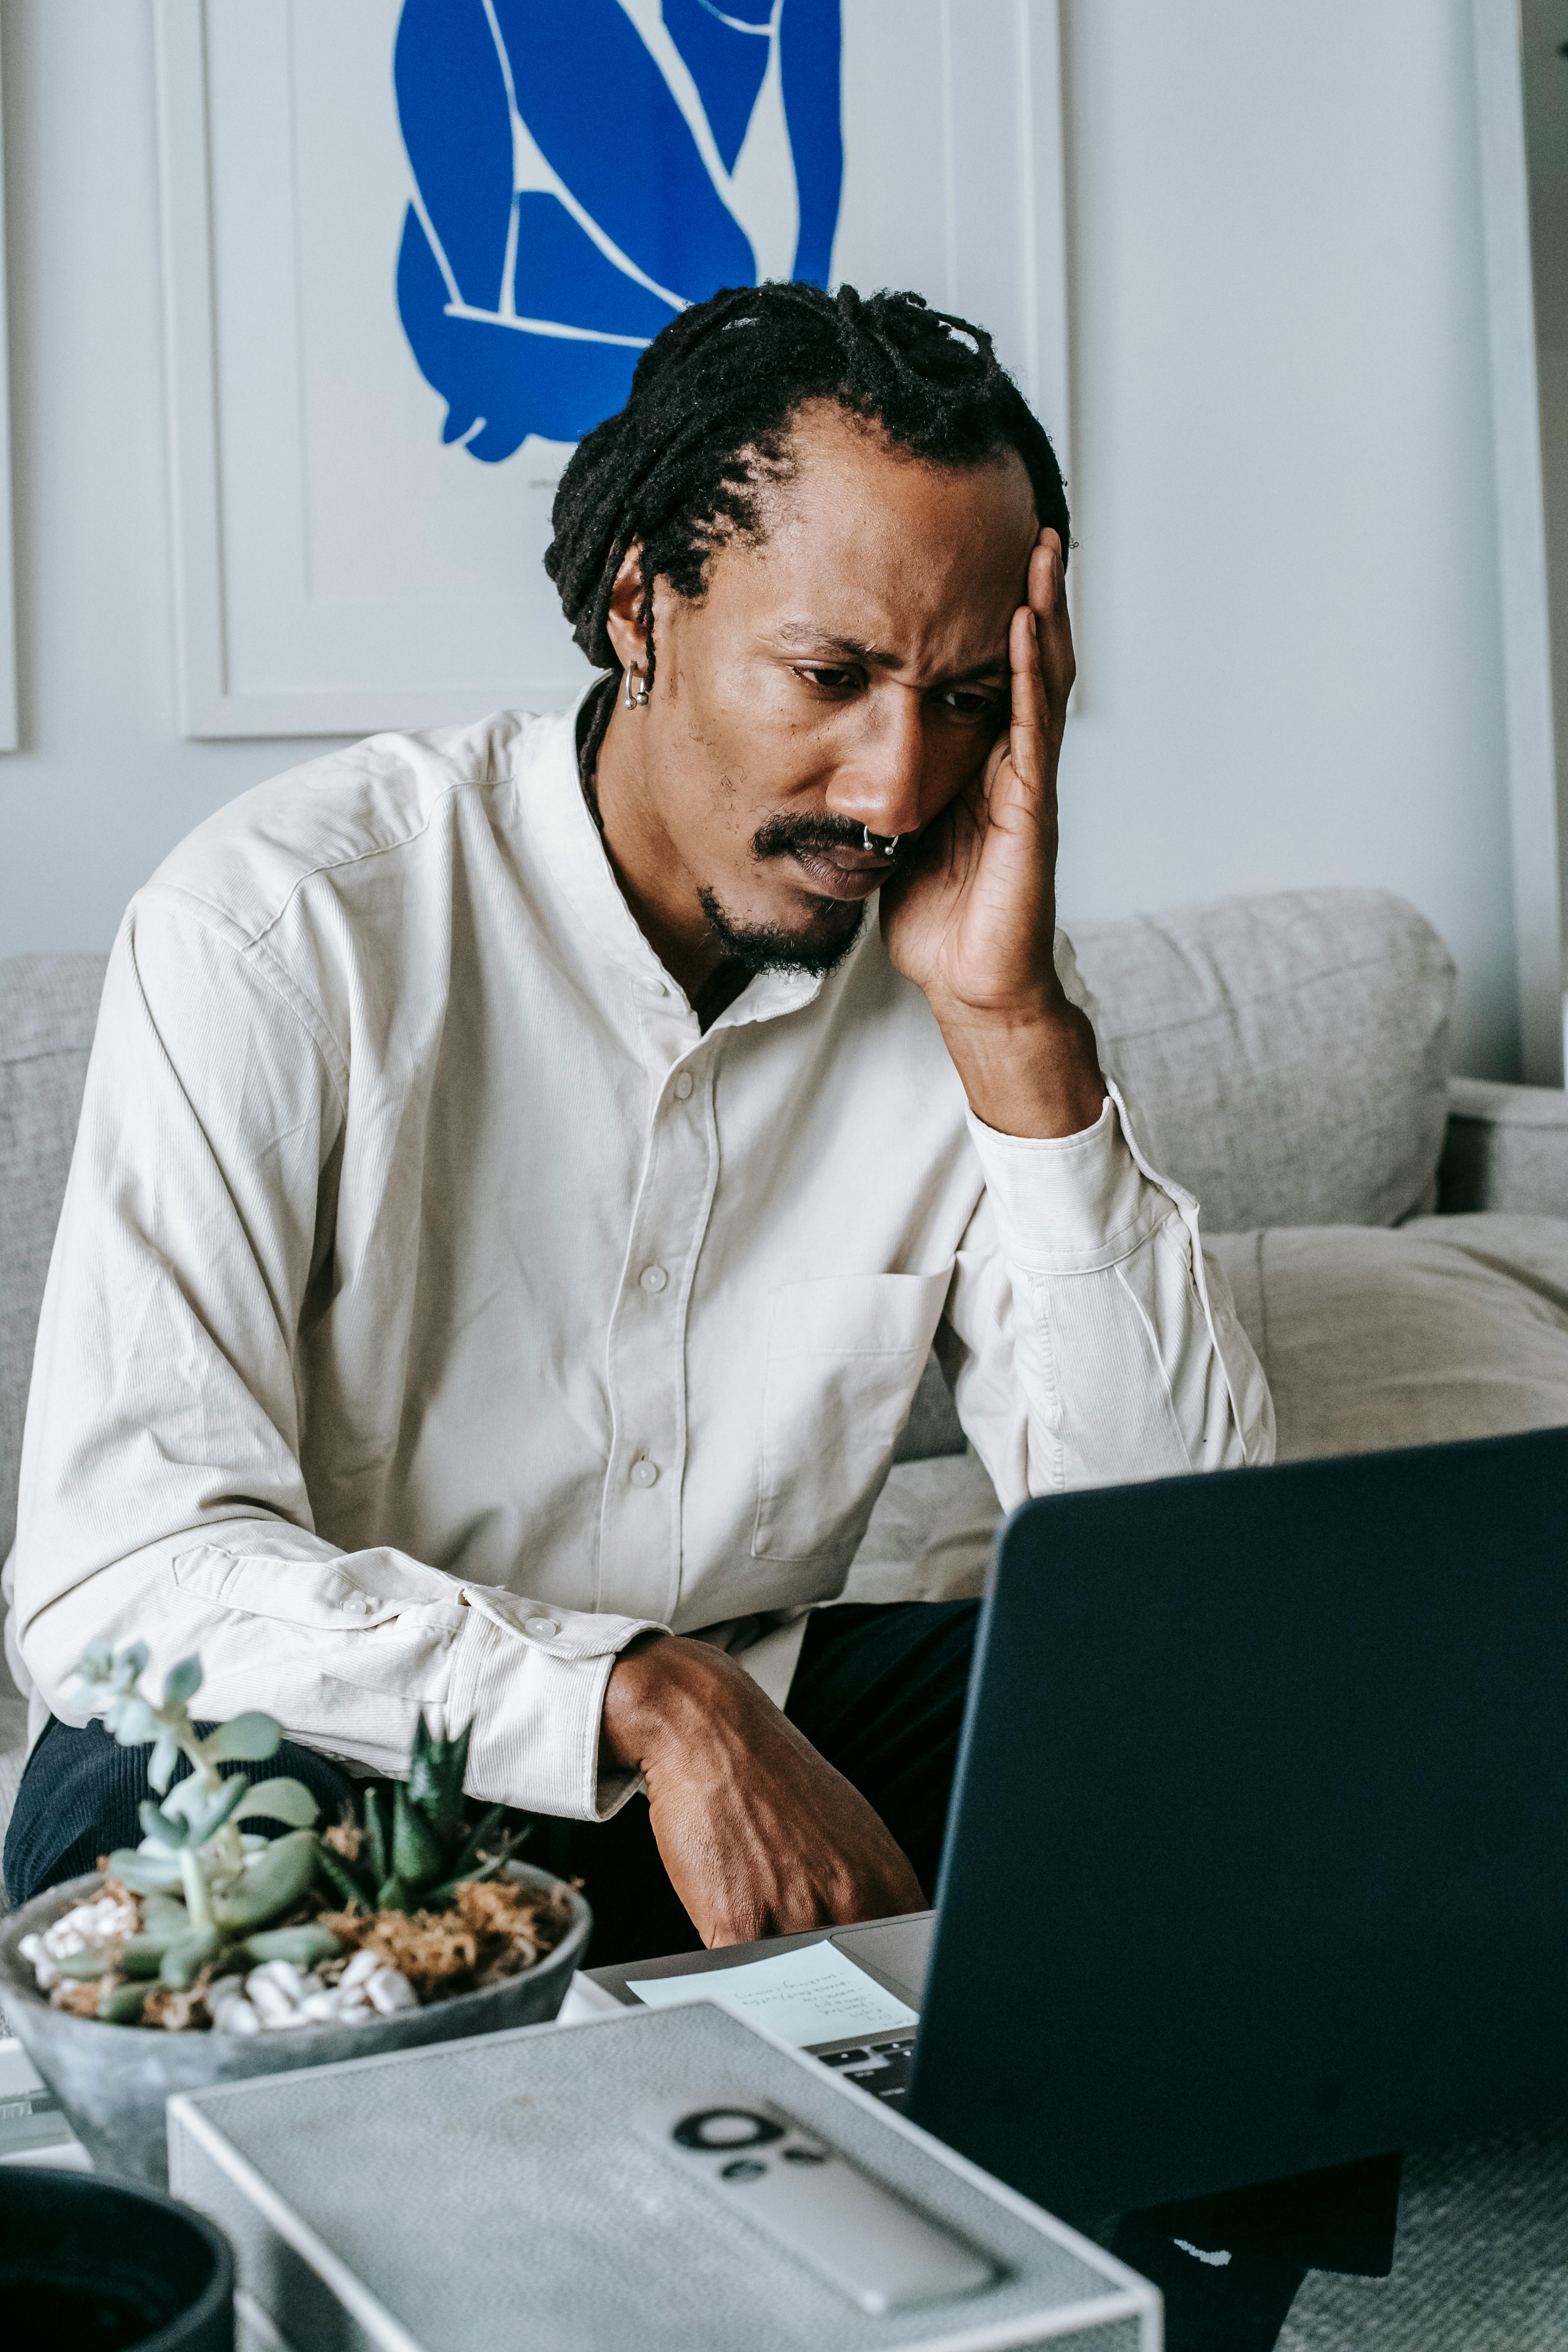 upset frowning man using laptop at home